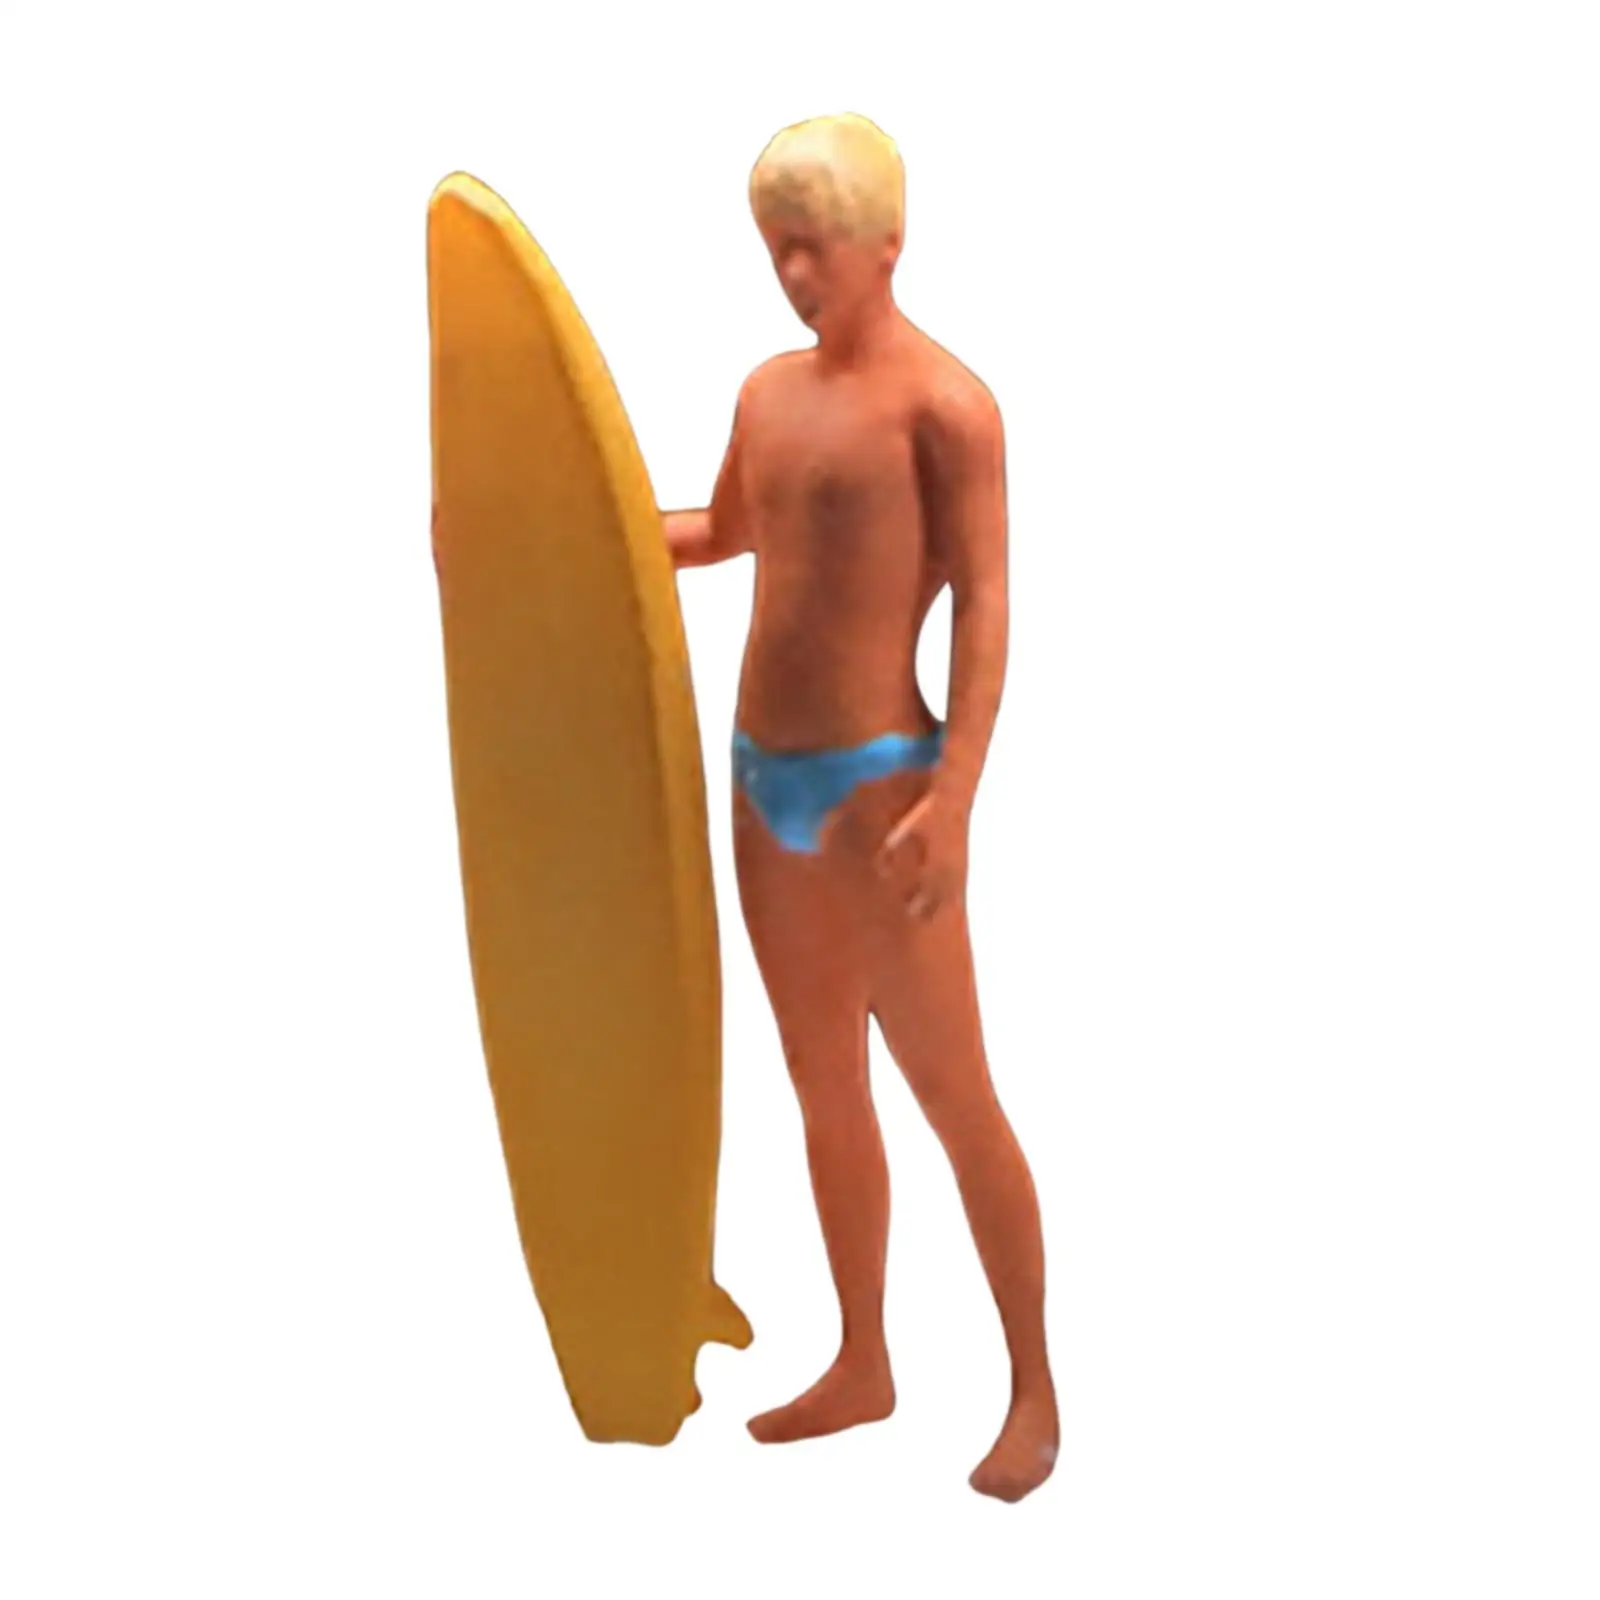 1/64 Scale Beach Model People Figures Realistic Figures for DIY Scene Layout Decor